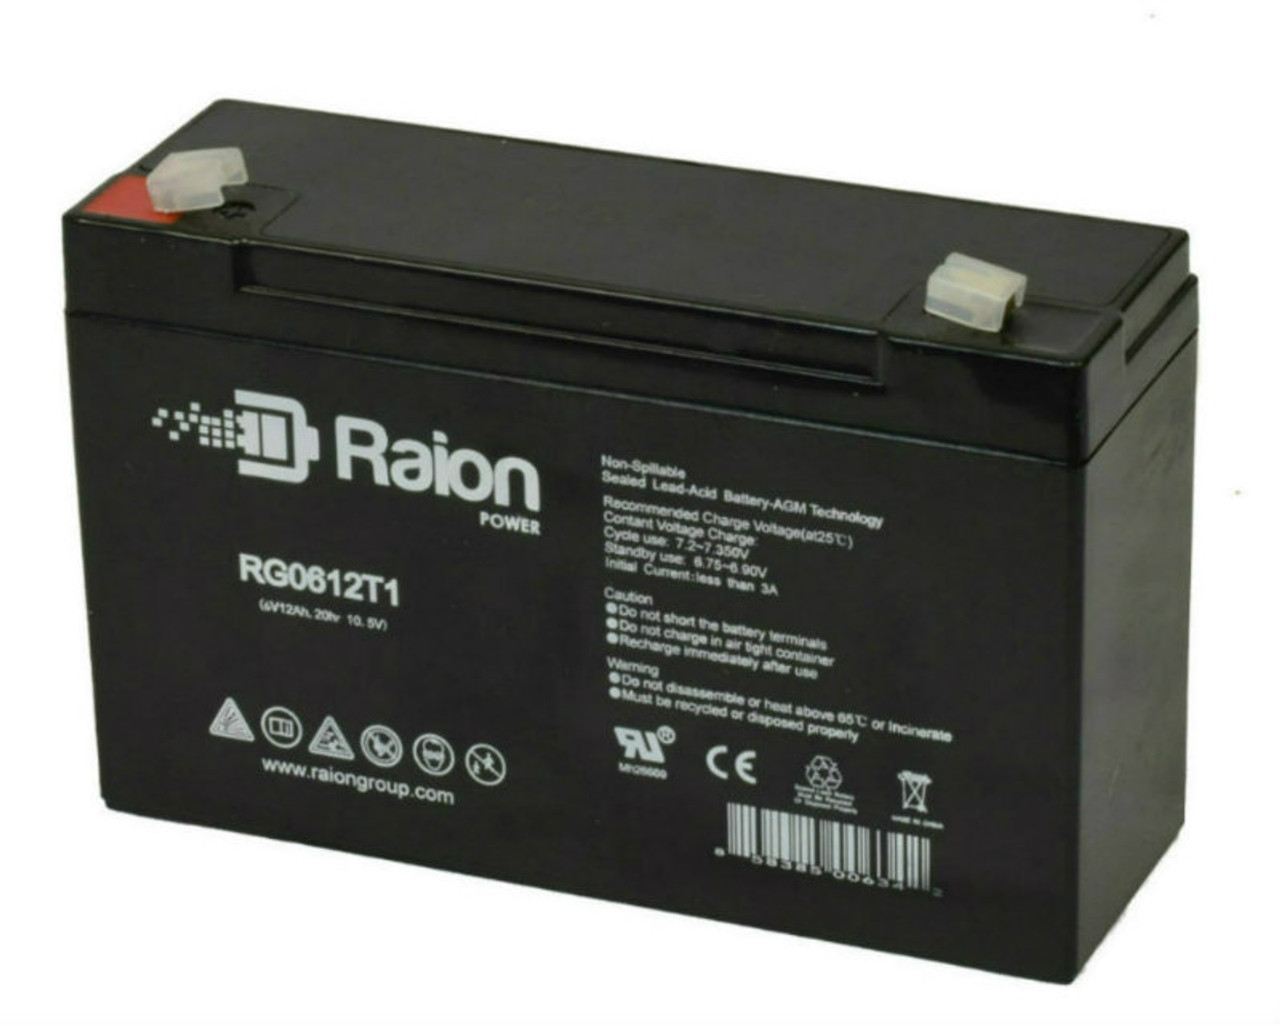 Raion Power RG06120T1 Replacement Spotlight Battery for Streamlight SL40X